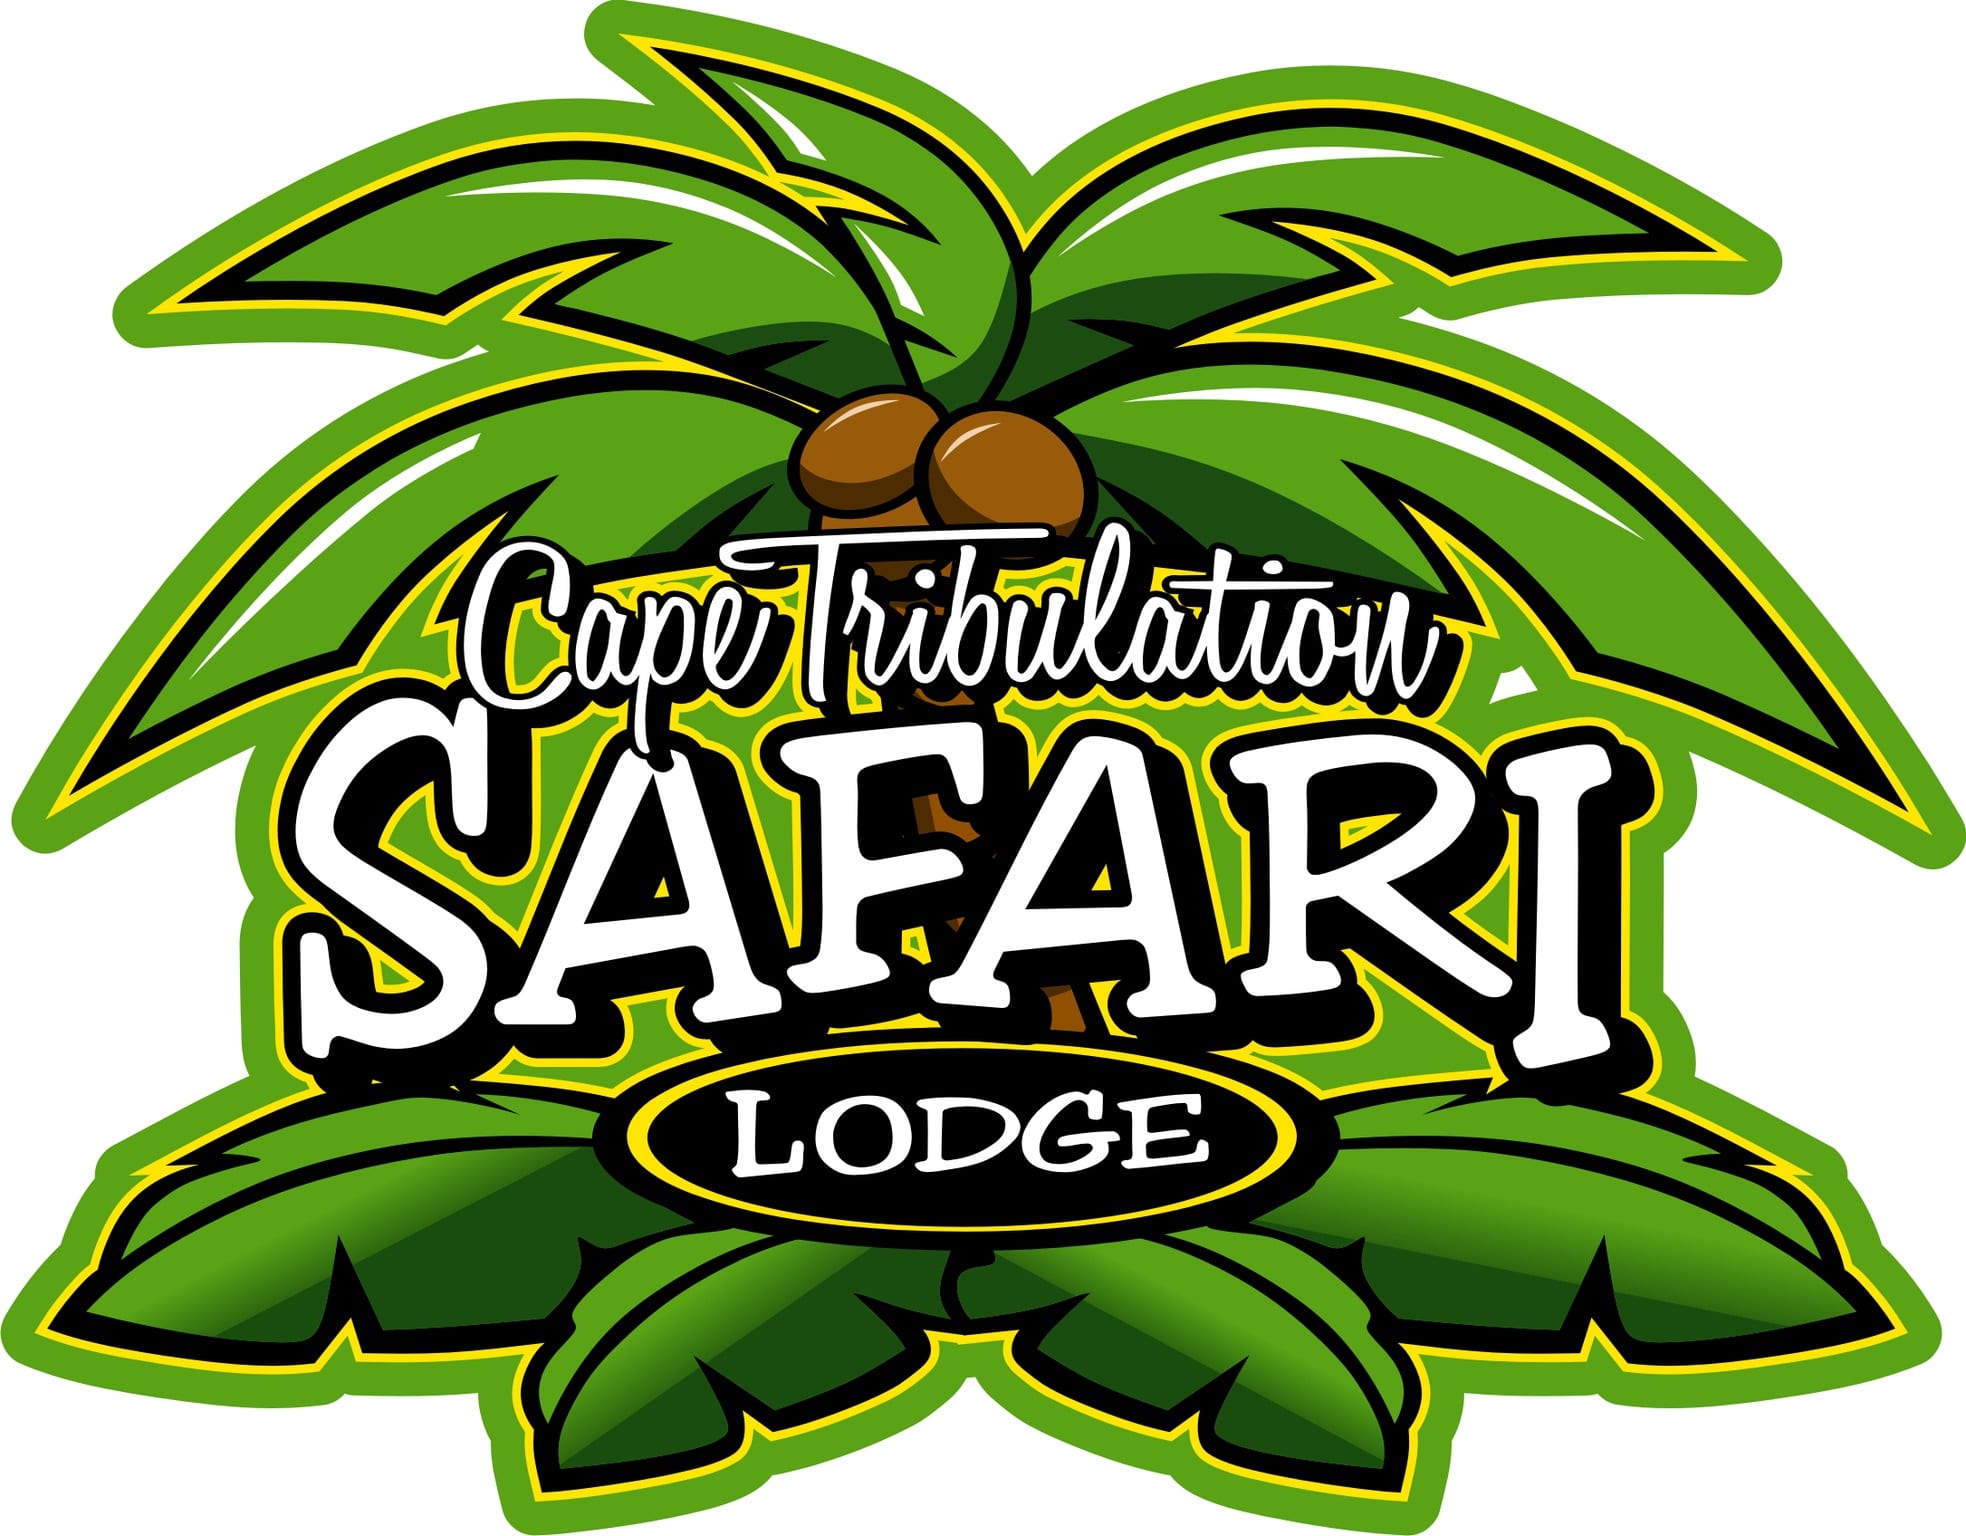 safari lodge logo